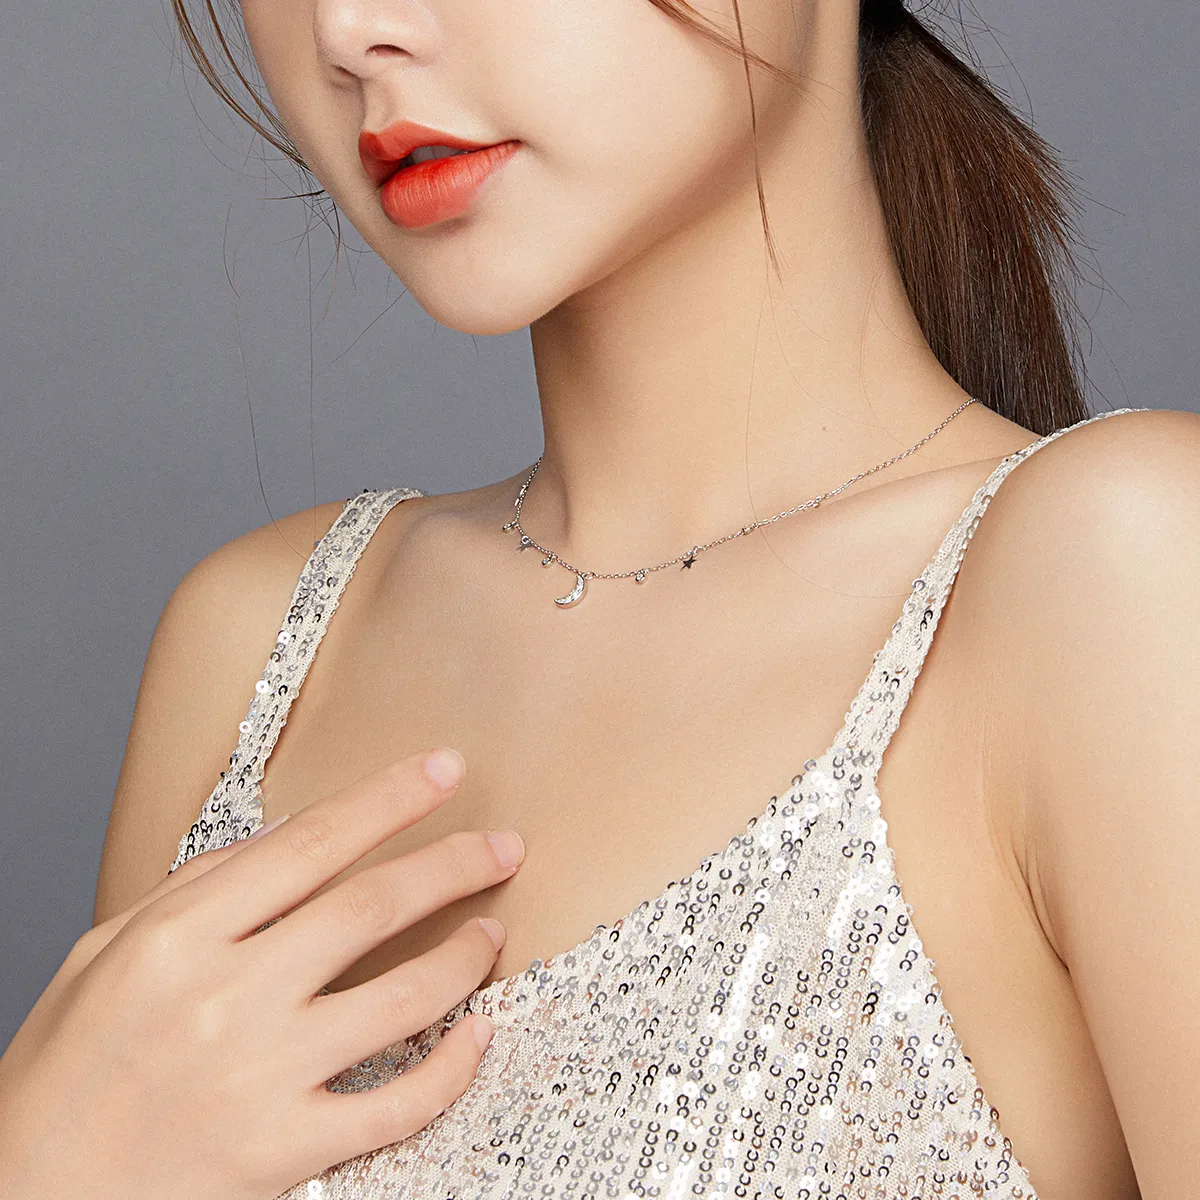 Pandora Style Silver Dream Star Moon Pendant Necklace - SCN420